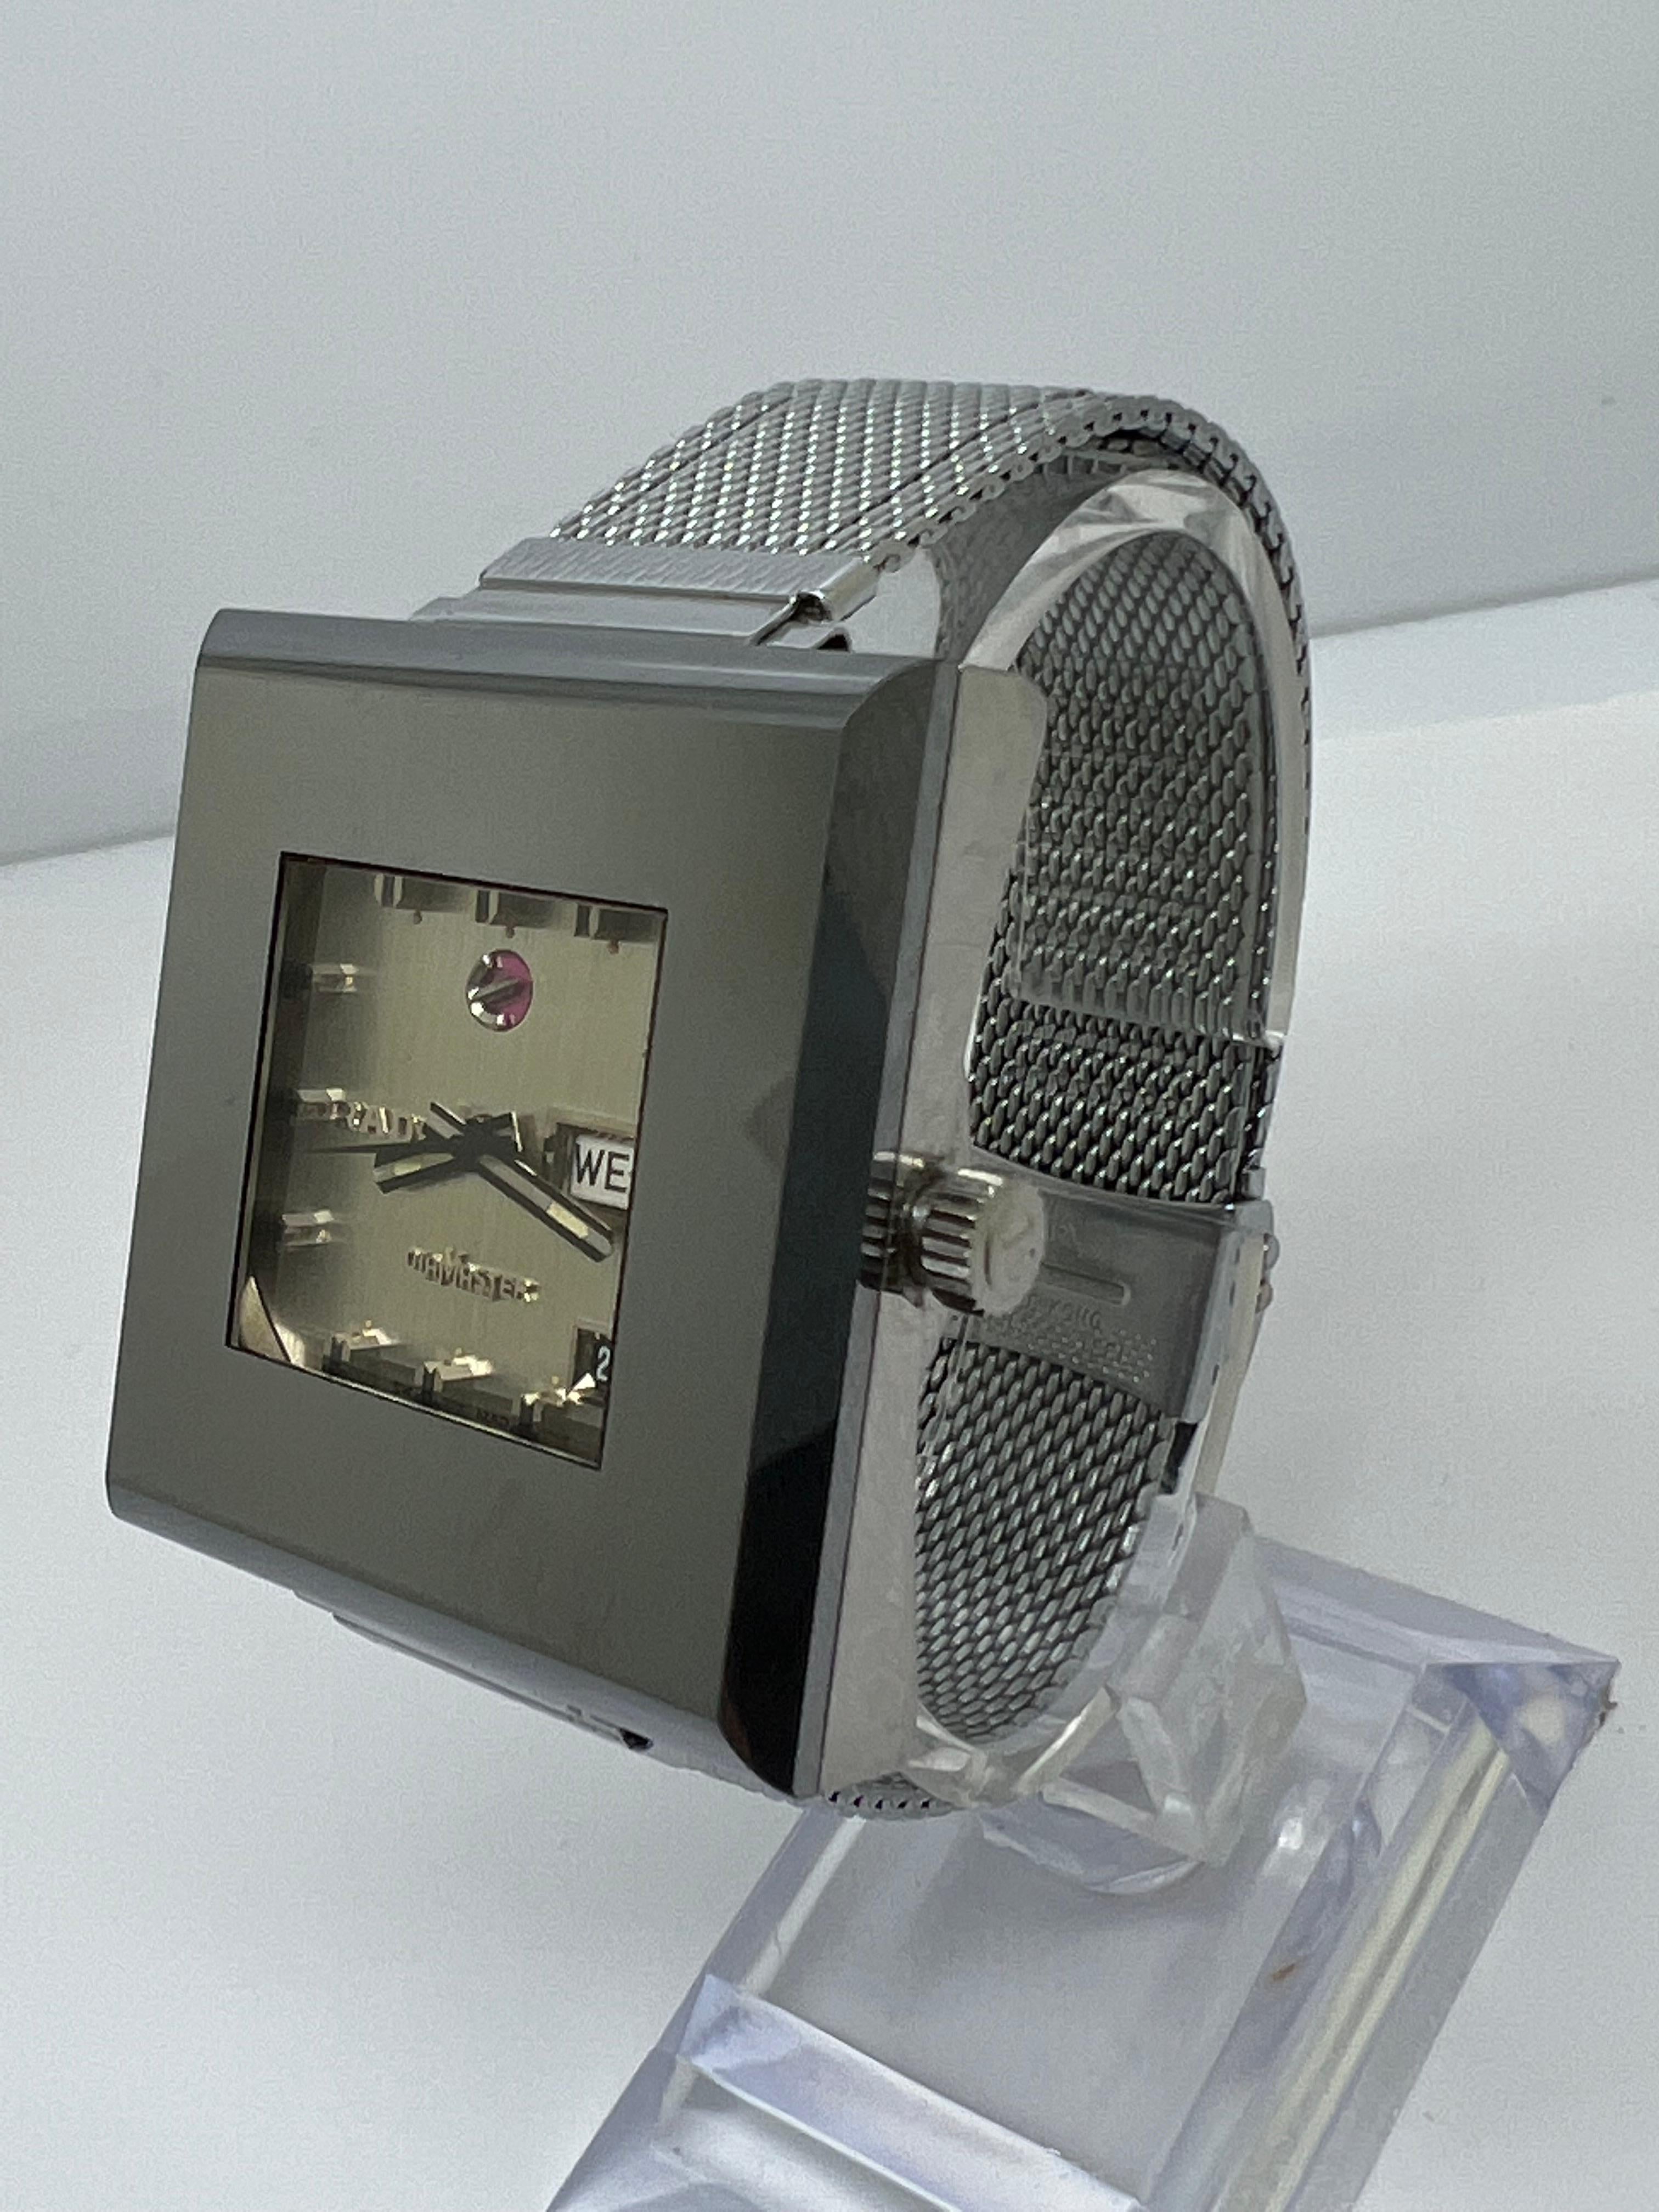 Rado DiaMaster 10 Tumgsten Case Scratchproof Vintage Watch

40mm

all original parts

excellent condition

Rare!!!!!!

Automatic movement

runs perfect